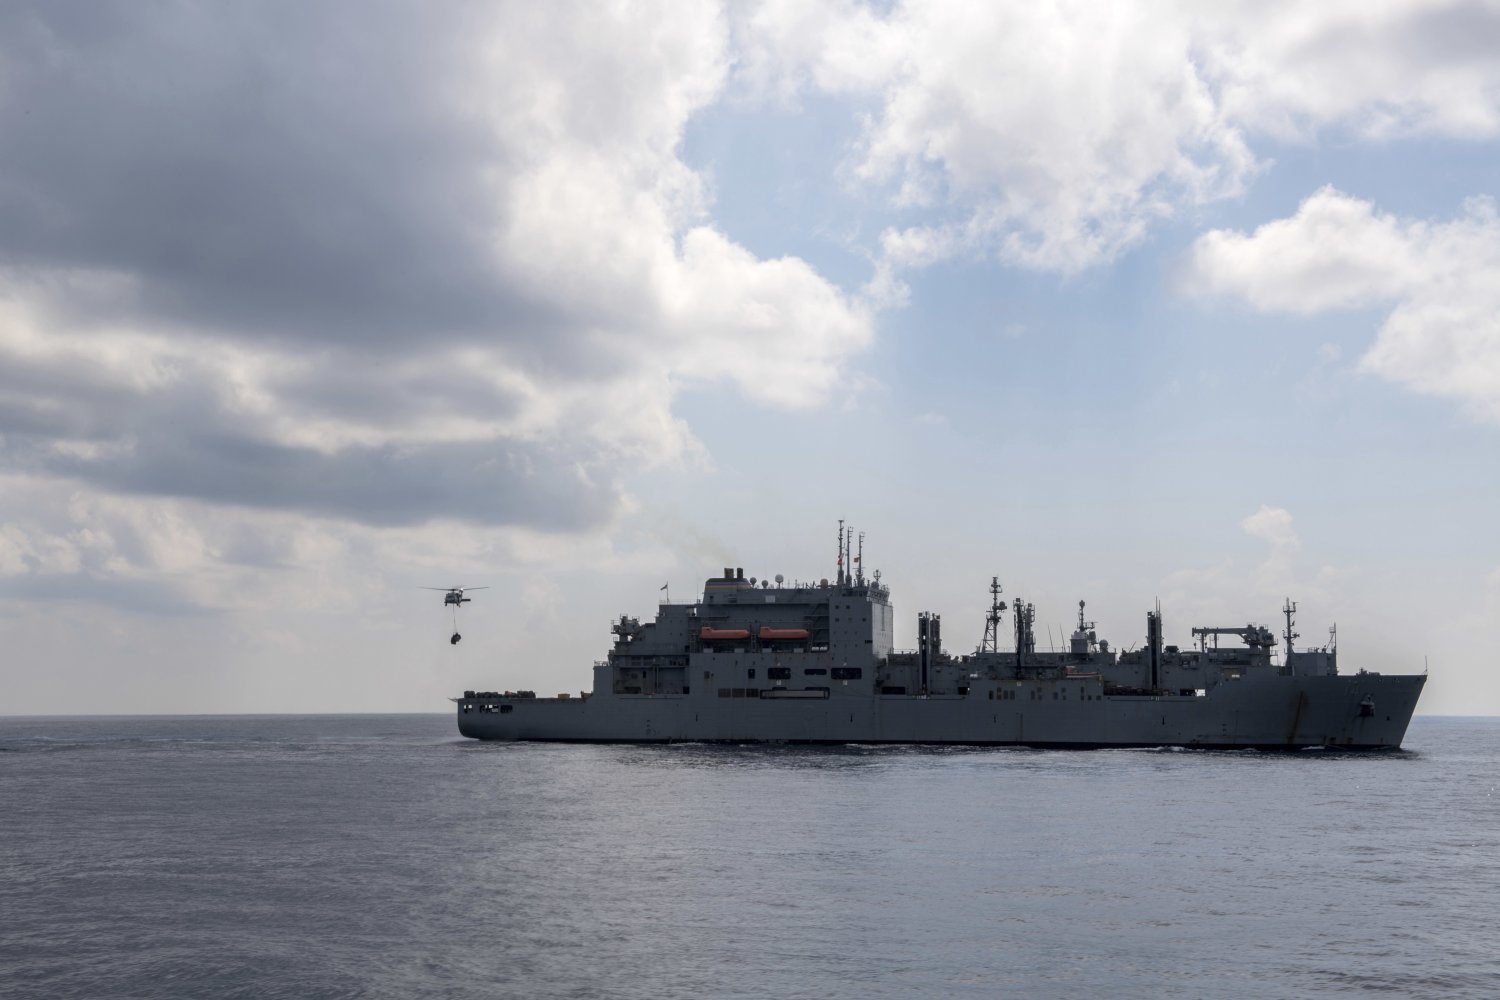 USNS Cesar Chavez T-AKE-14 LAPEL HAT PIN UP US LS Logistics Support Ship